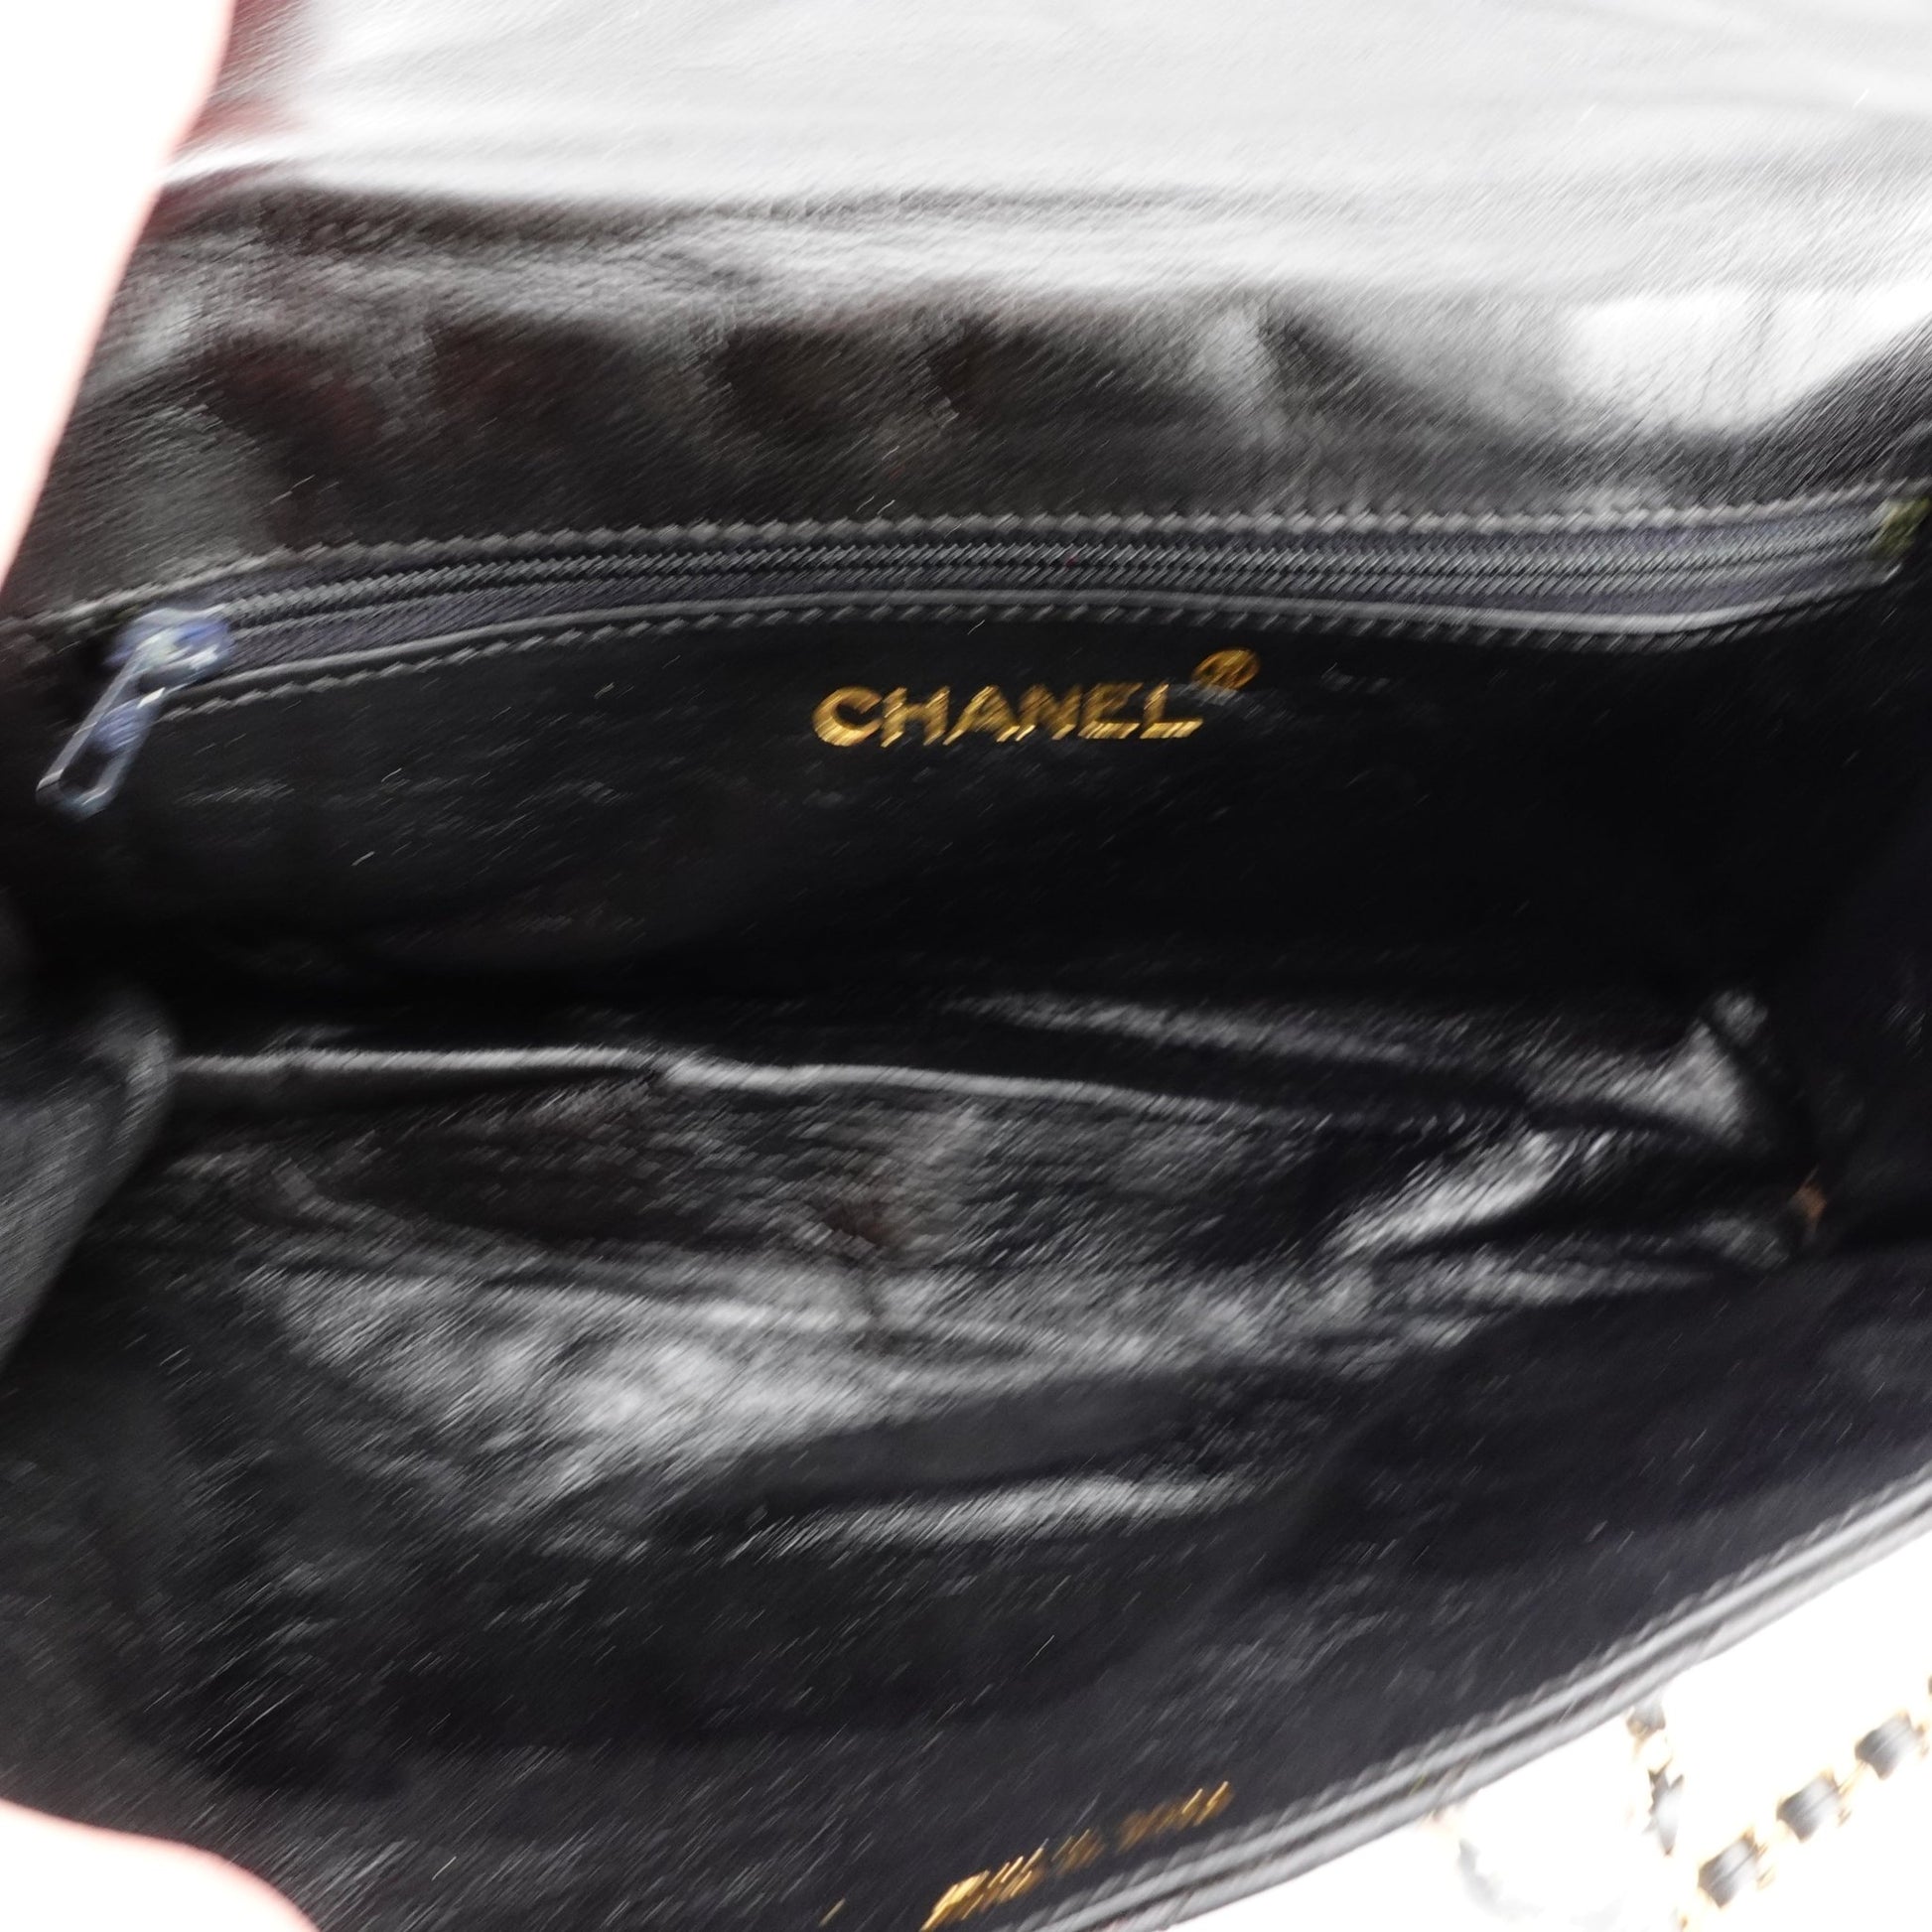 CHANEL Lambskin Chevron Tassel Clutch with Adjustable Chain - Bag Envy